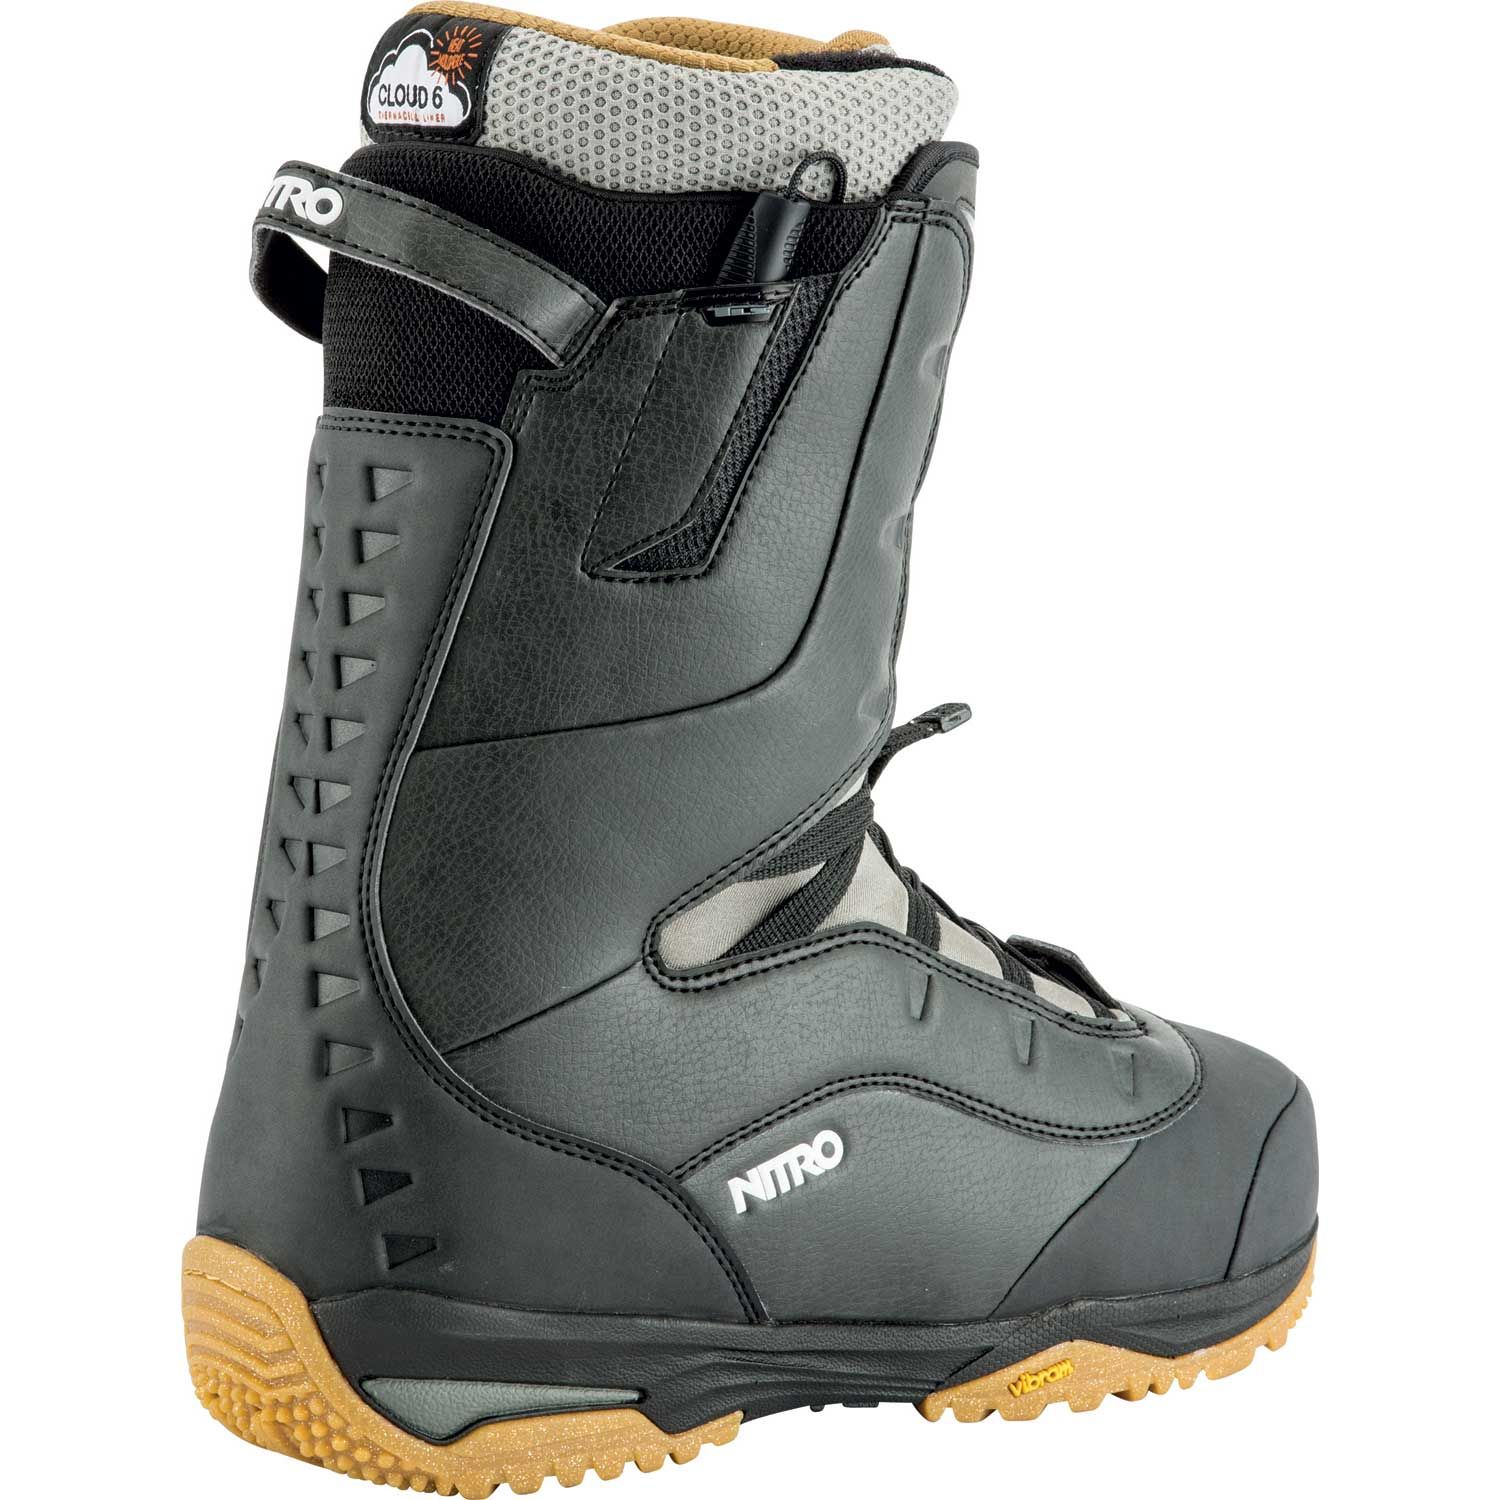 Boots de snowboard Venture Pro TLS - Noir